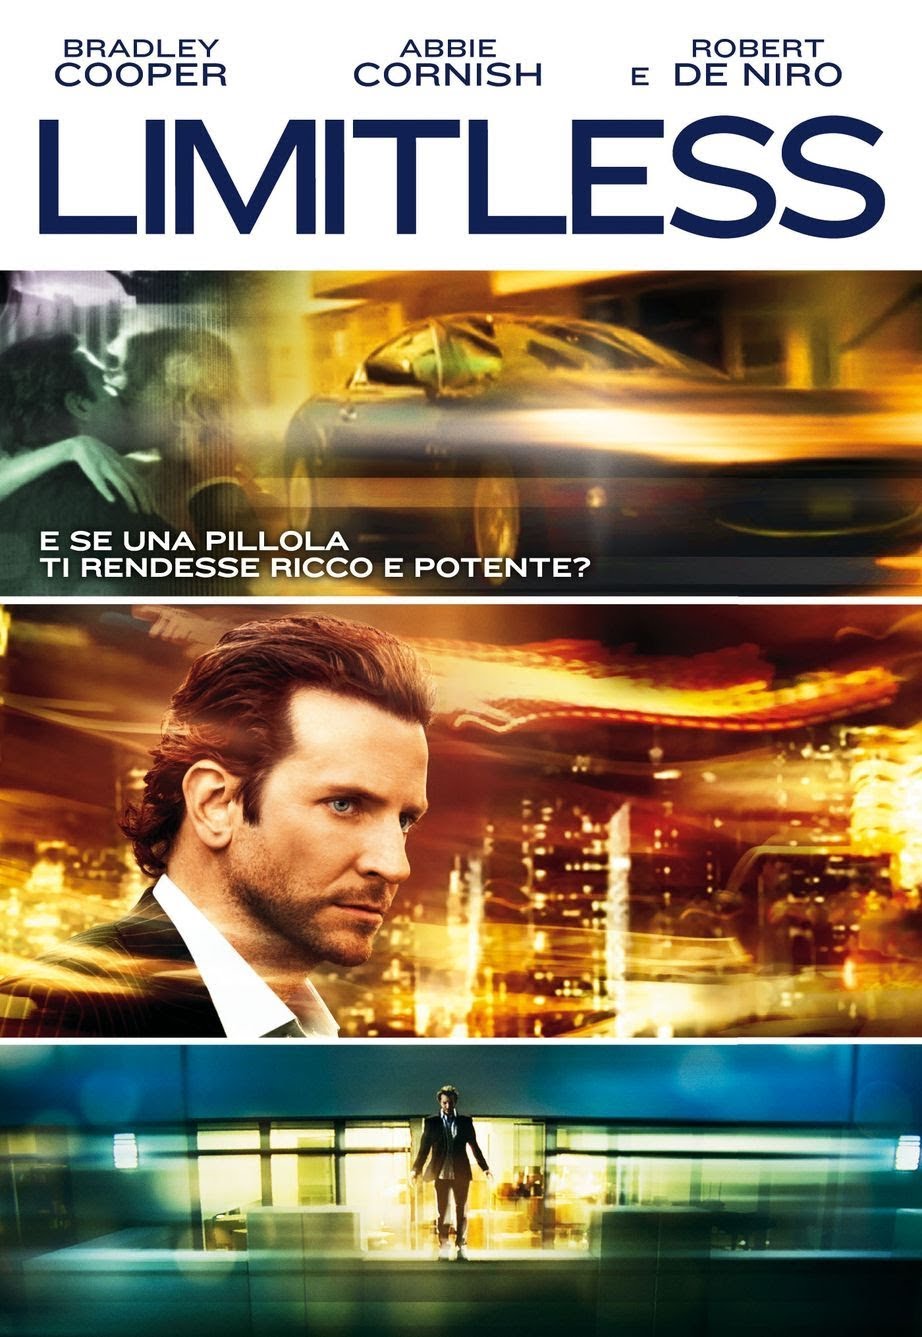 Limitless [HD] (2011)